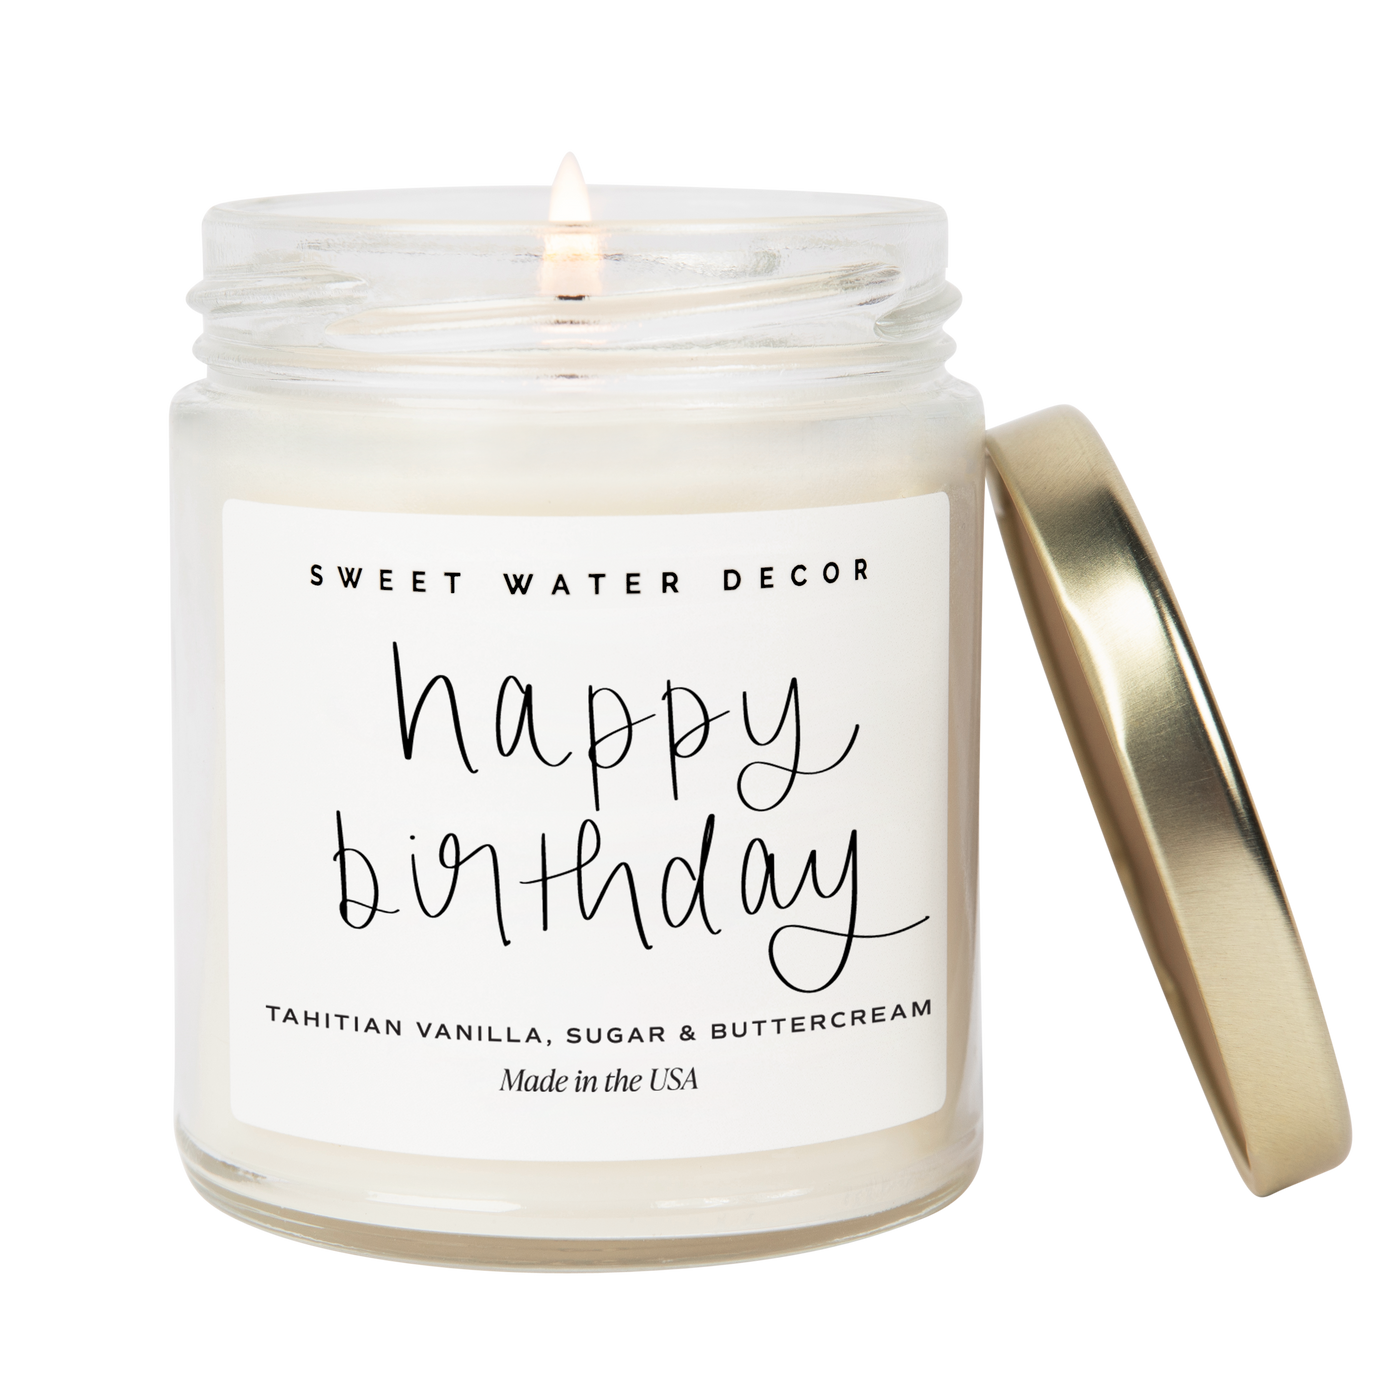 Happy Birthday Soy Candle - White Script Label - 9 oz